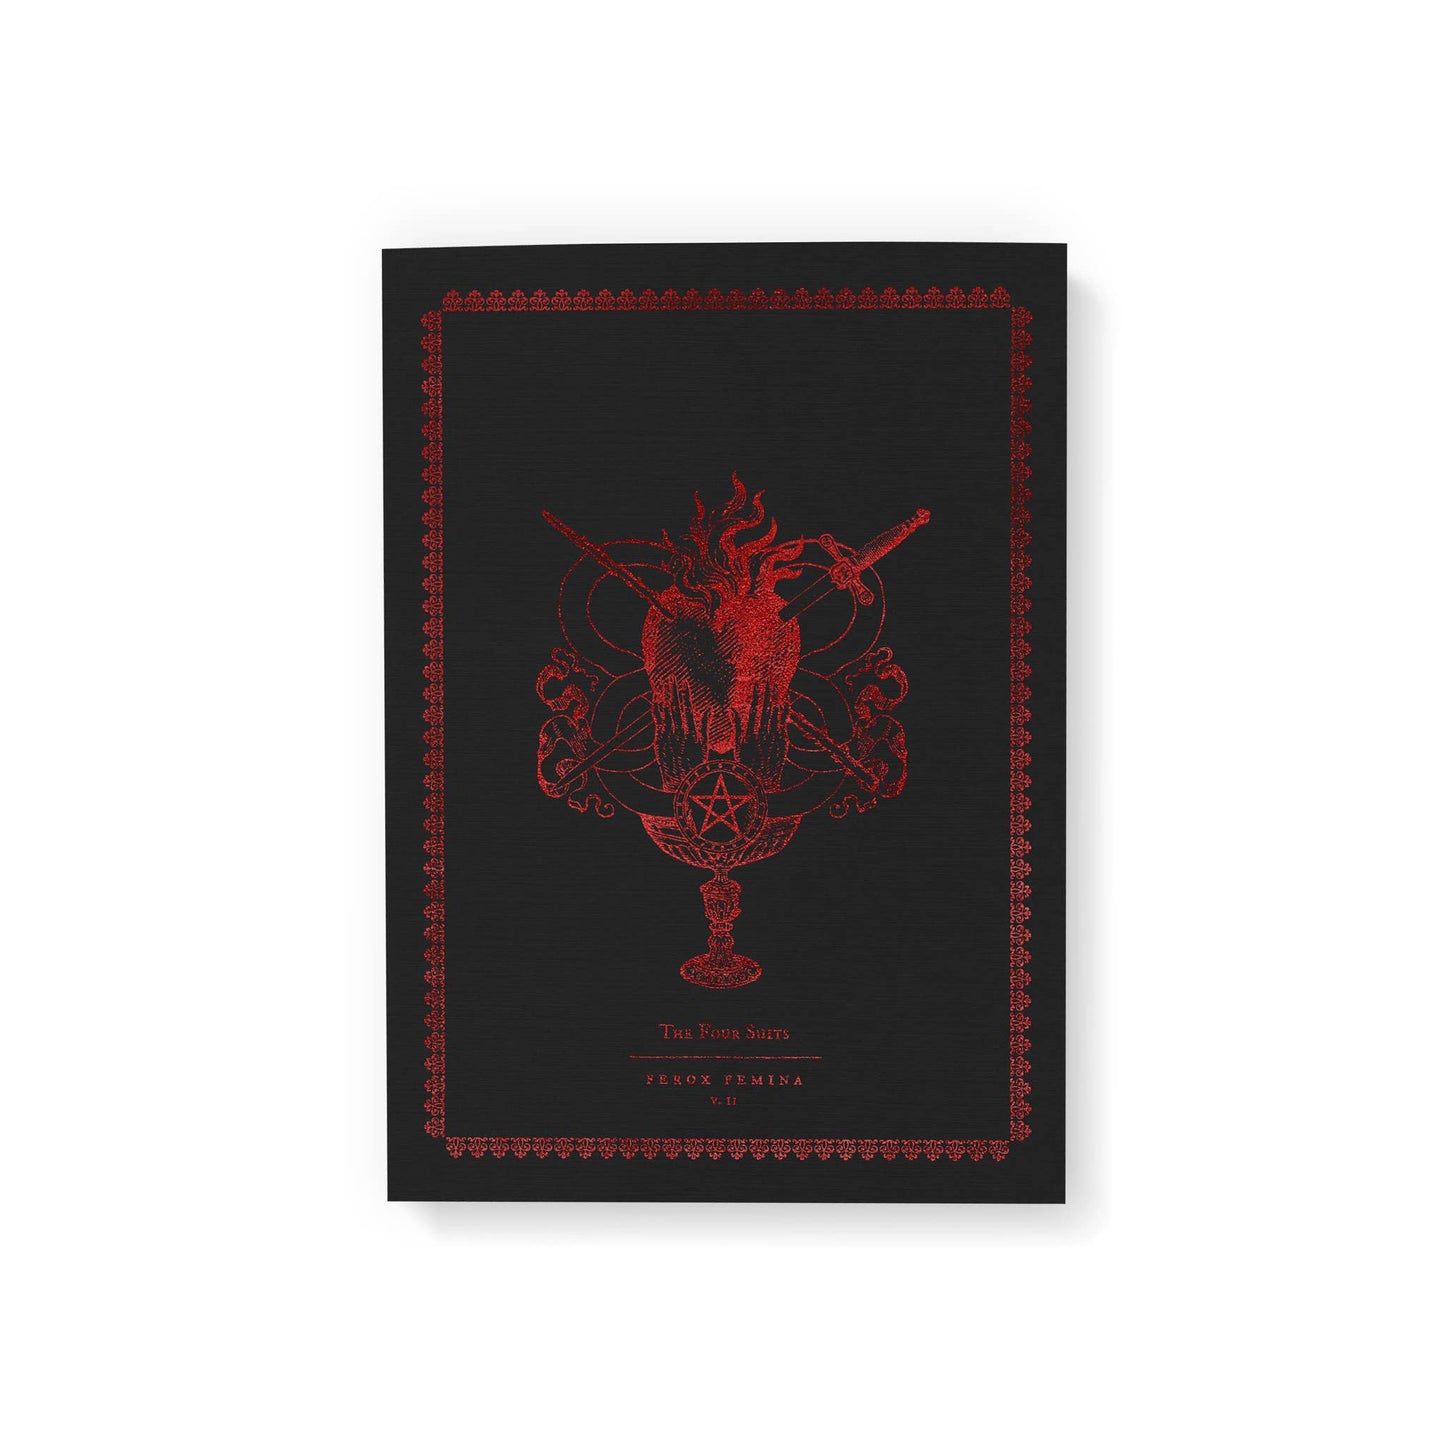 Ferox Femina II Black and Red Foil Cover - Notebook/Journal